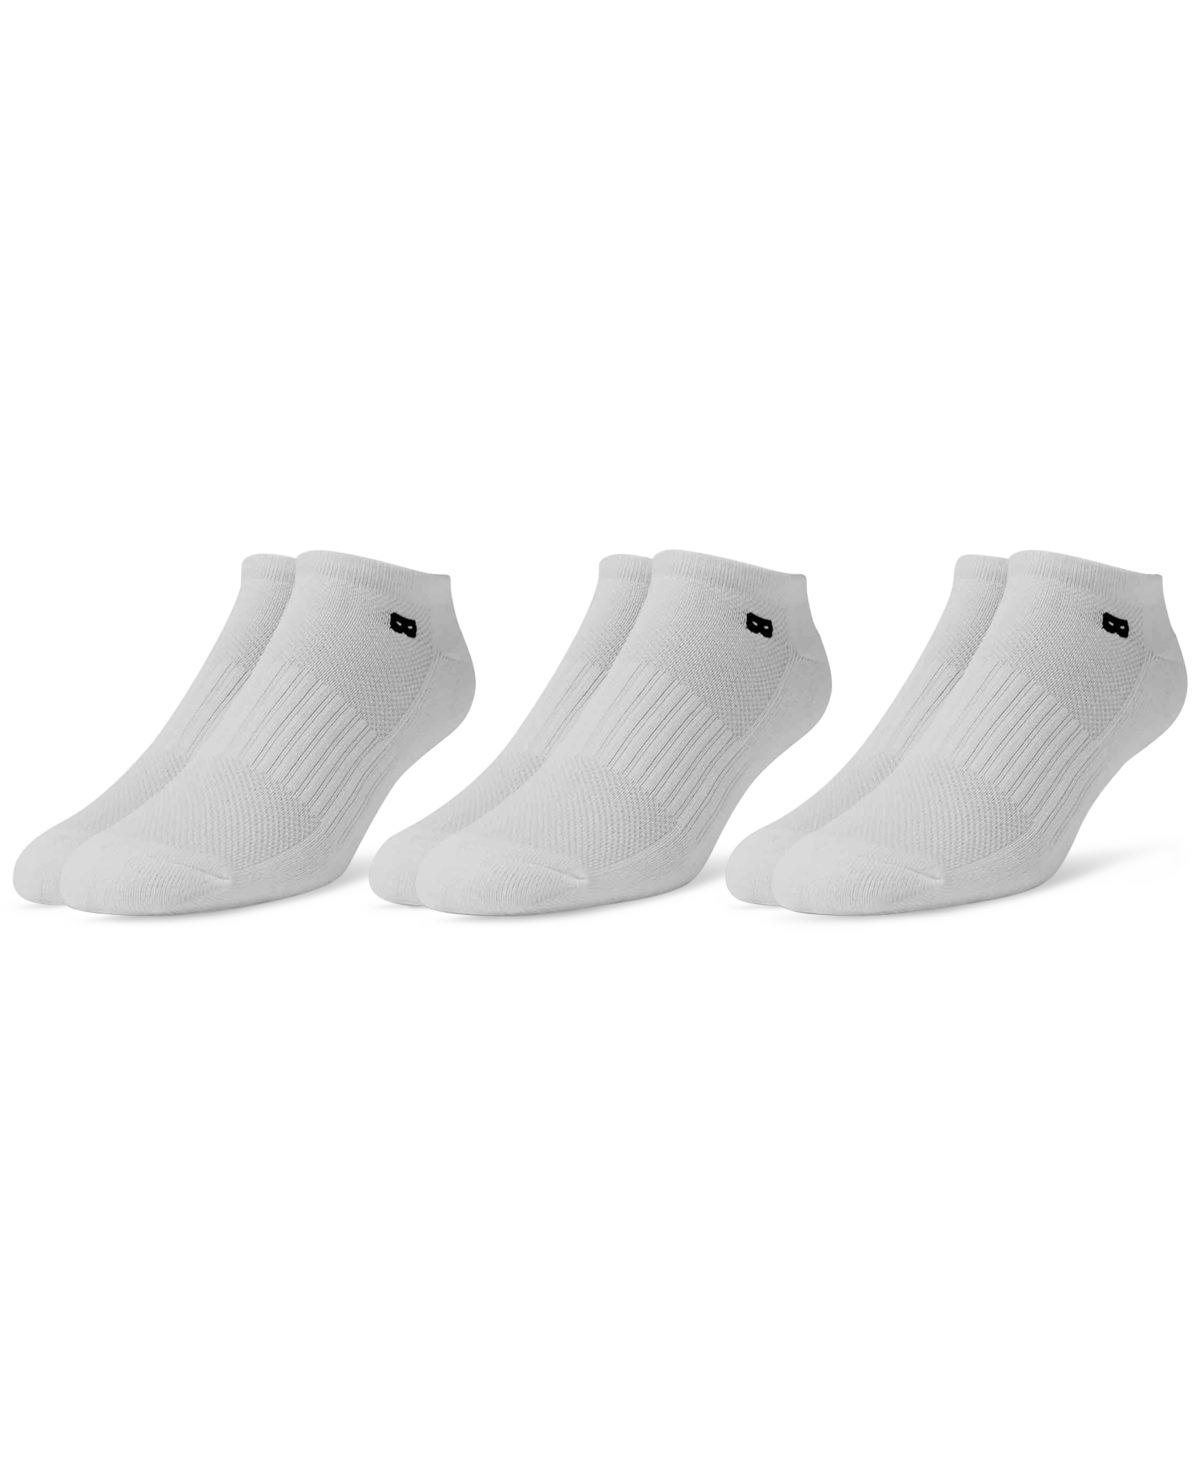 Men's Cushion Cotton Low Cut Socks 3 Pack - Blush